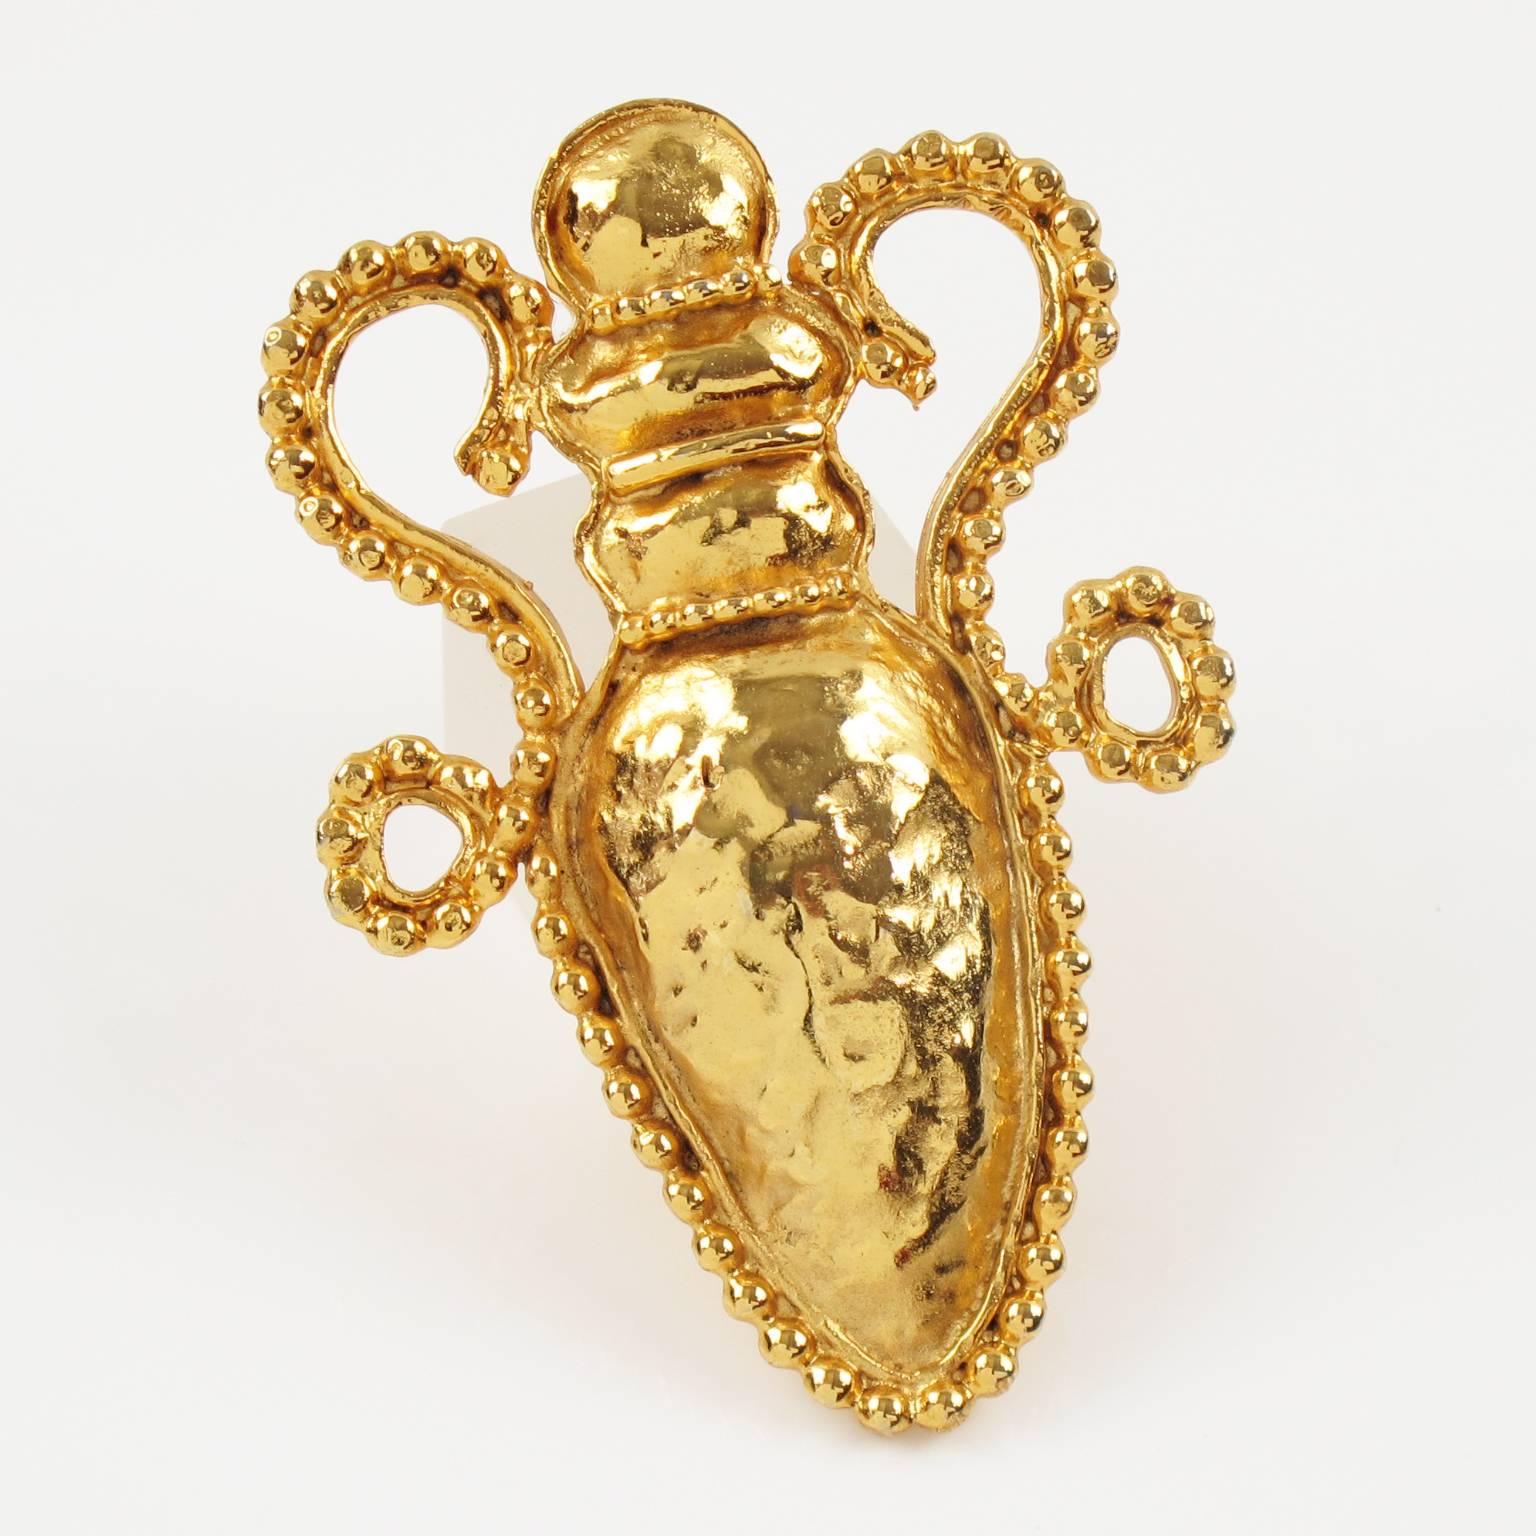 Modernist Edouard Rambaud Paris Signed Gilt Metal Pin Brooch Stylized Amphora Design